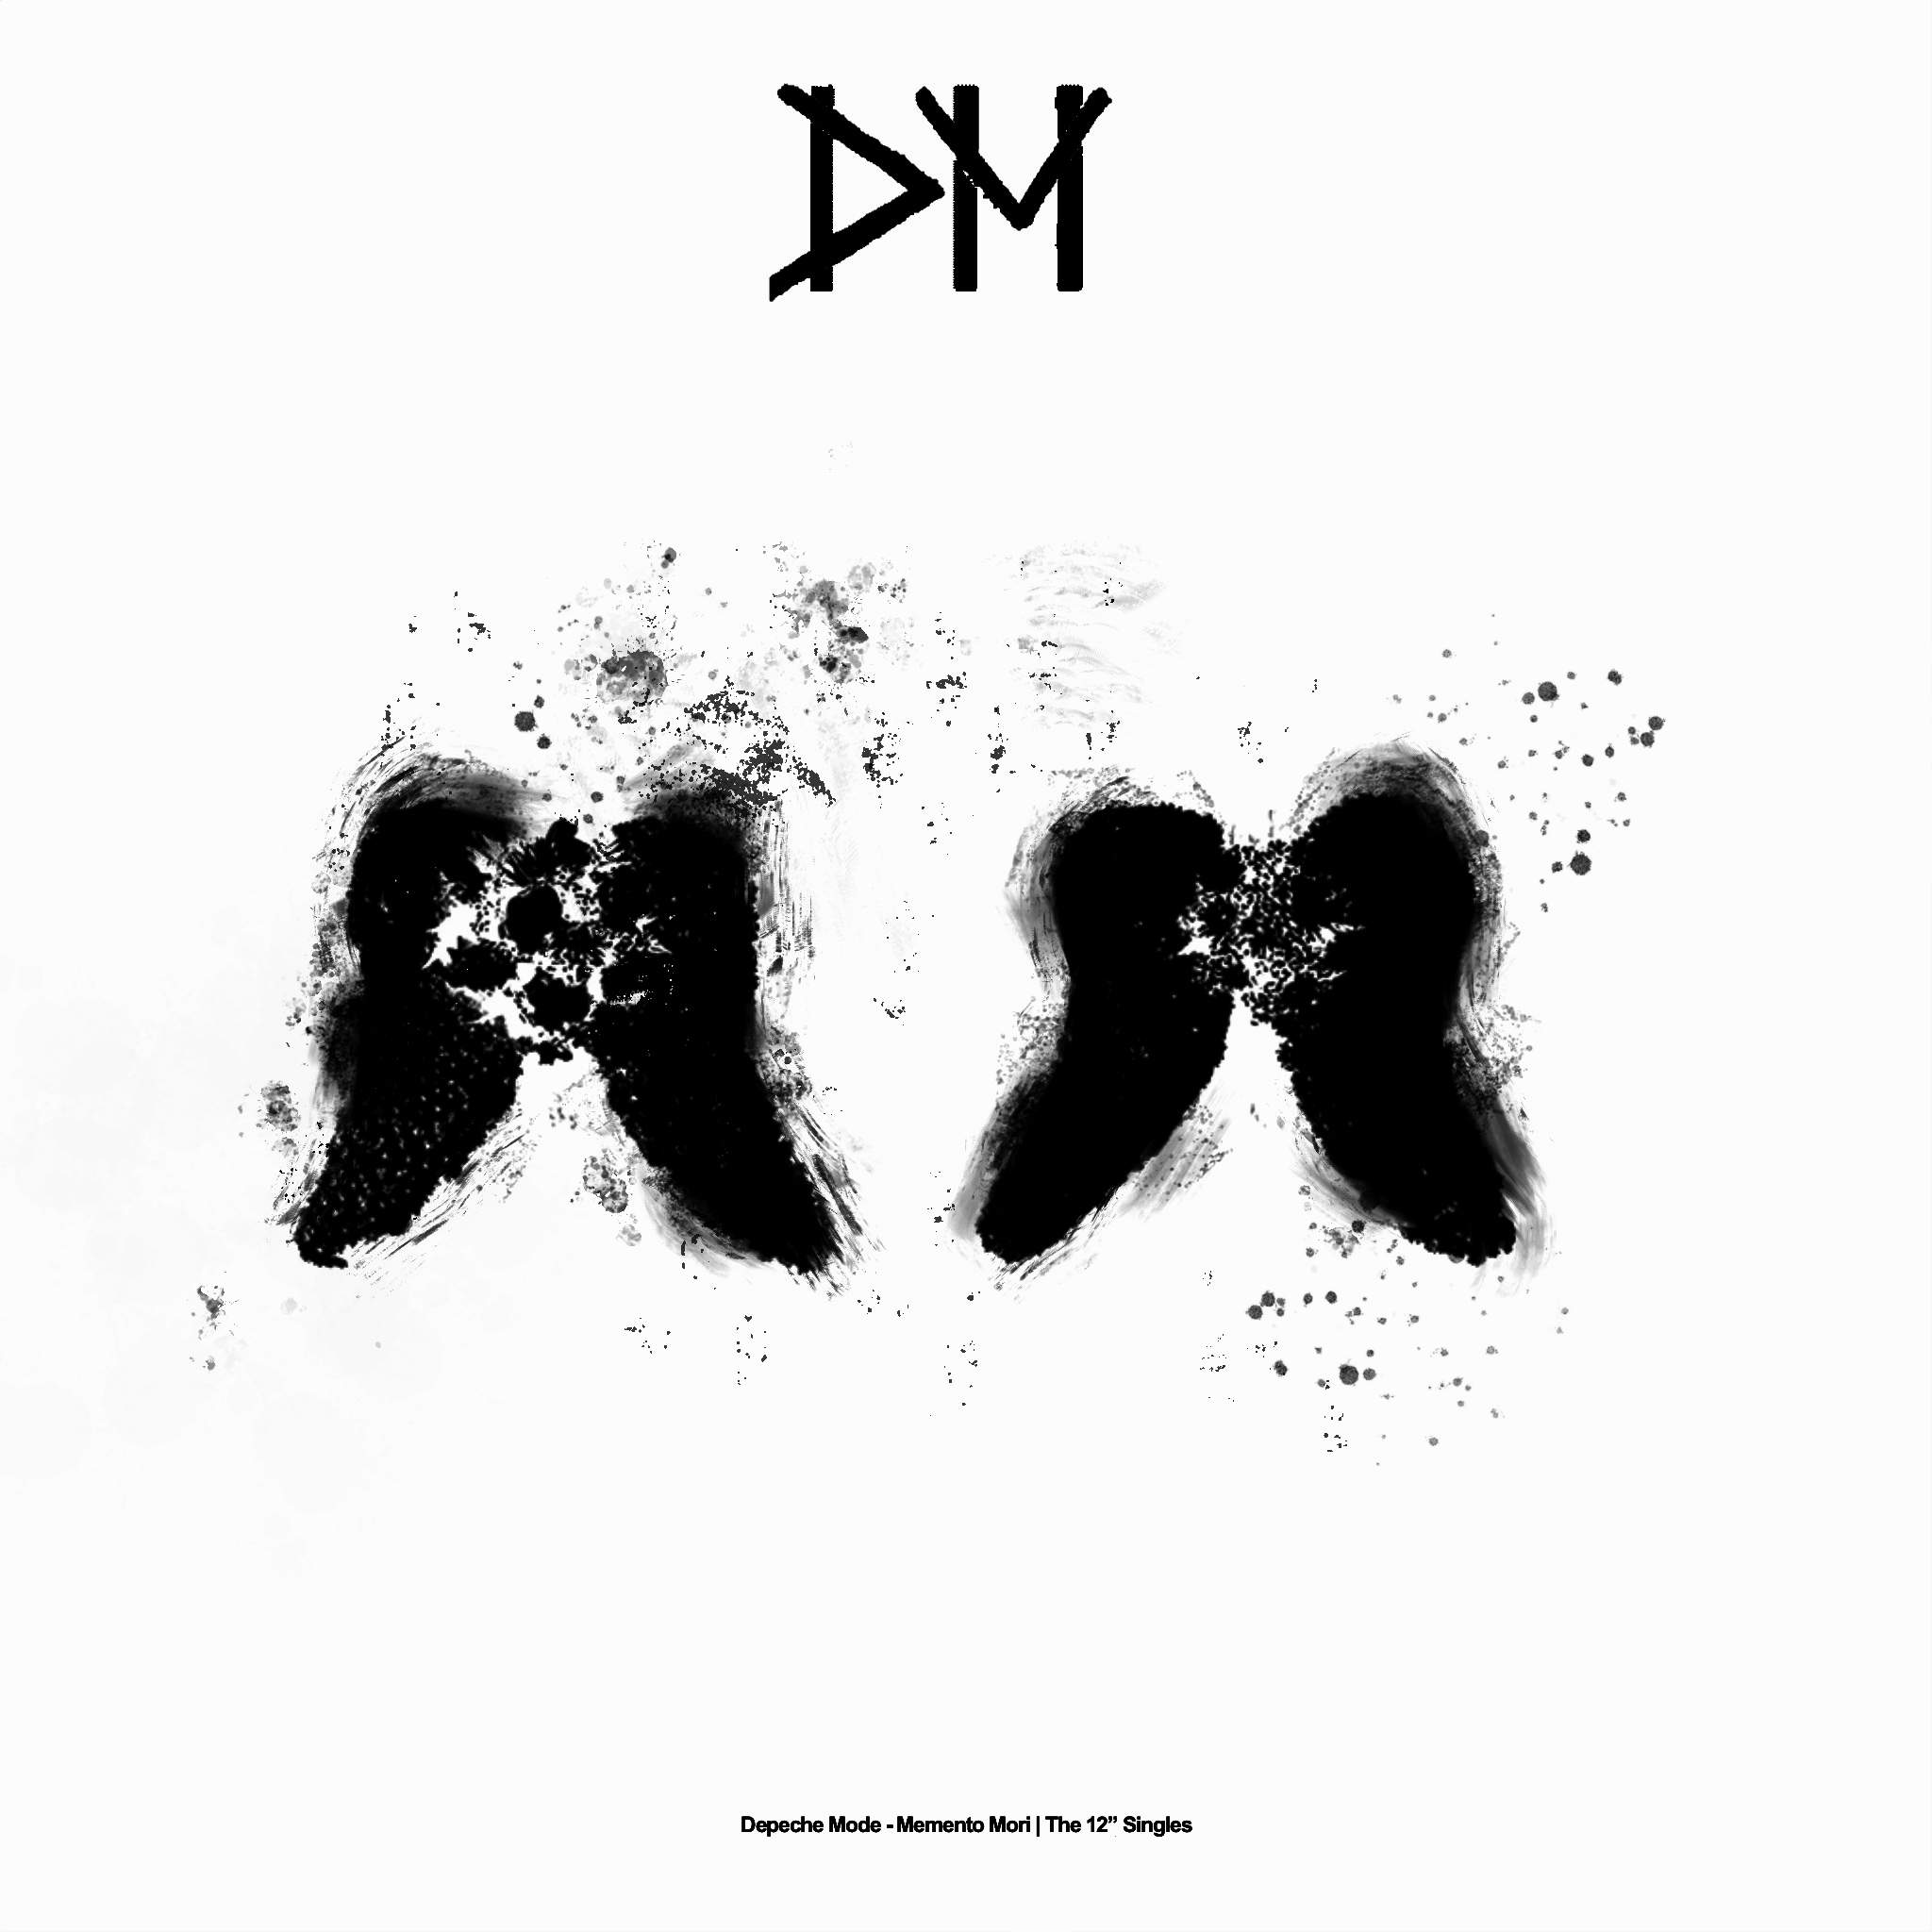 Depeche Mode - Memento Mori  The 12'' Singles by Lord0fPigs on DeviantArt